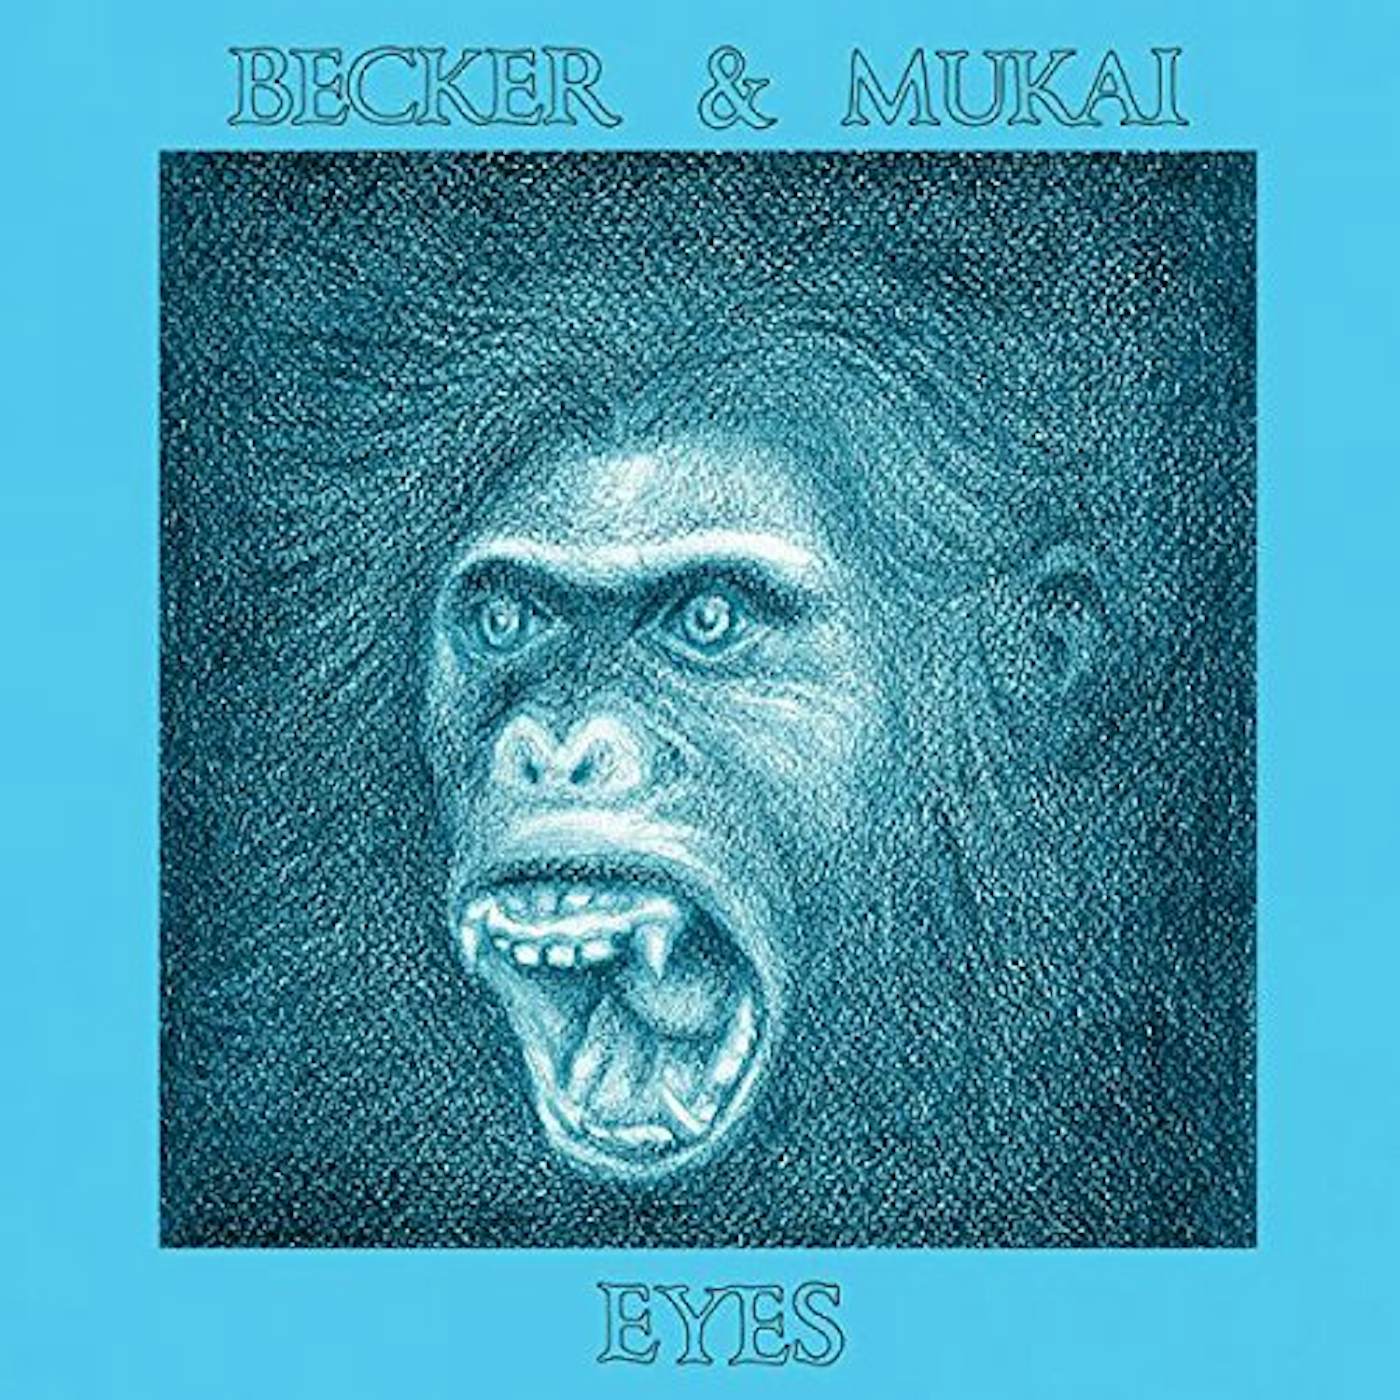 Becker & Mukai Eyes Vinyl Record